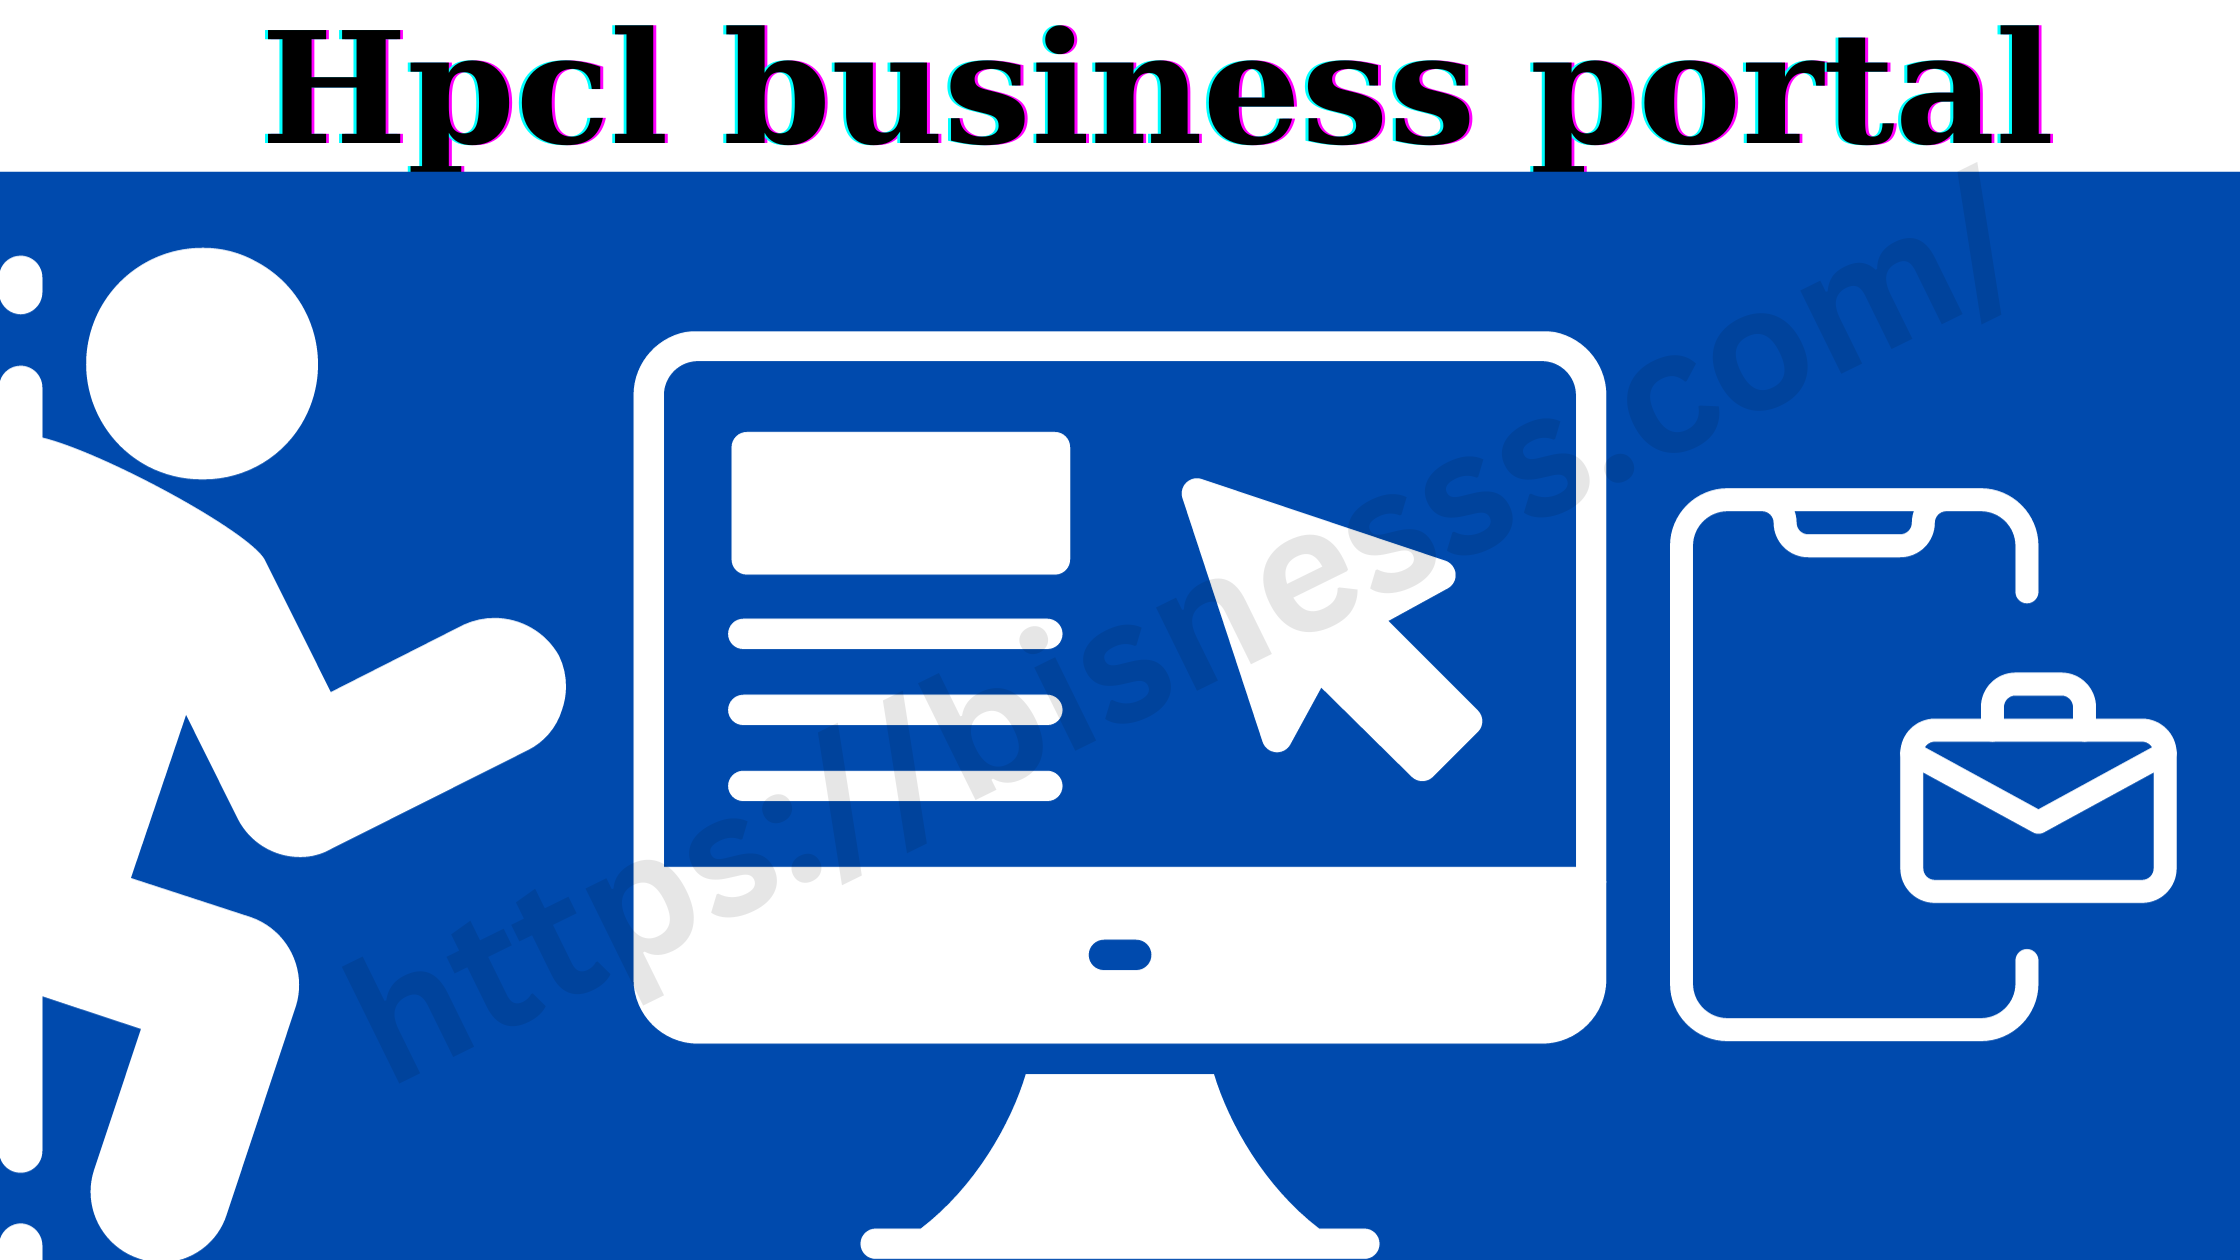 Hpcl business portal